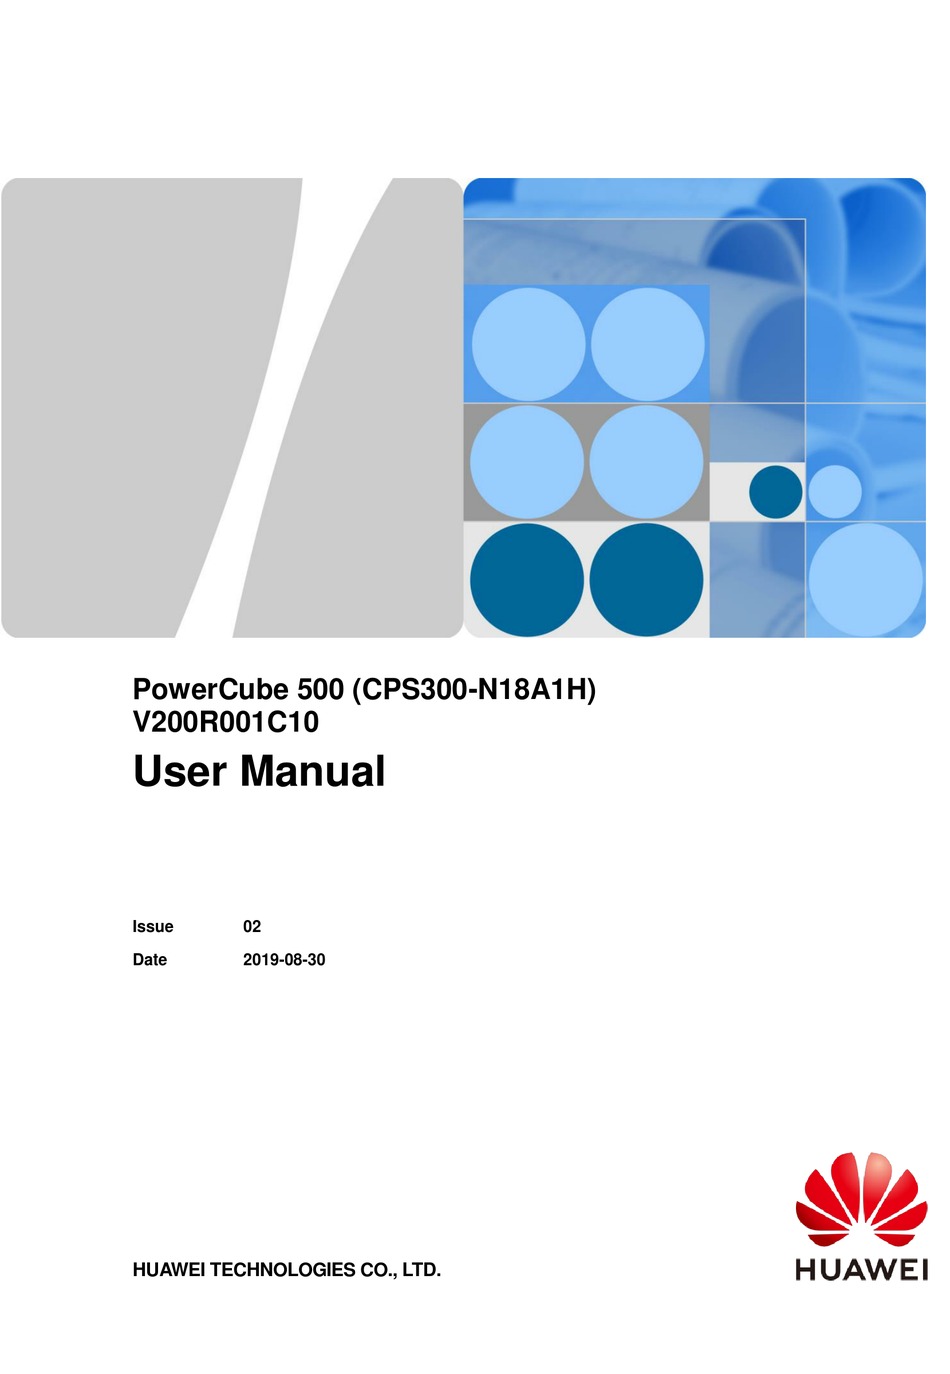 HUAWEI POWERCUBE 500 USER MANUAL Pdf Download | ManualsLib